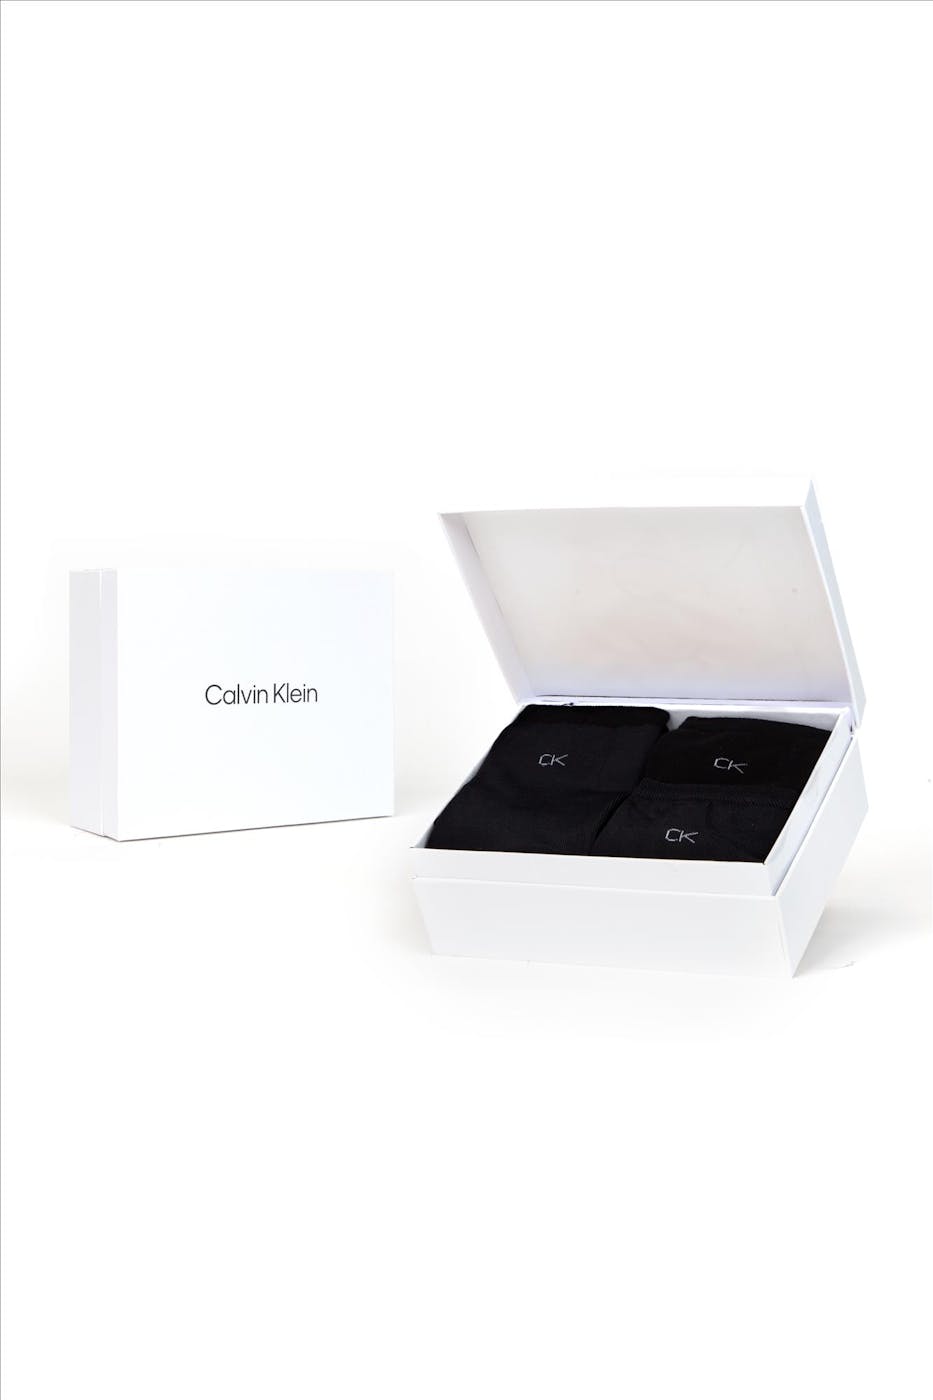 Calvin Klein - Zwarte 3-pack sokken, one size